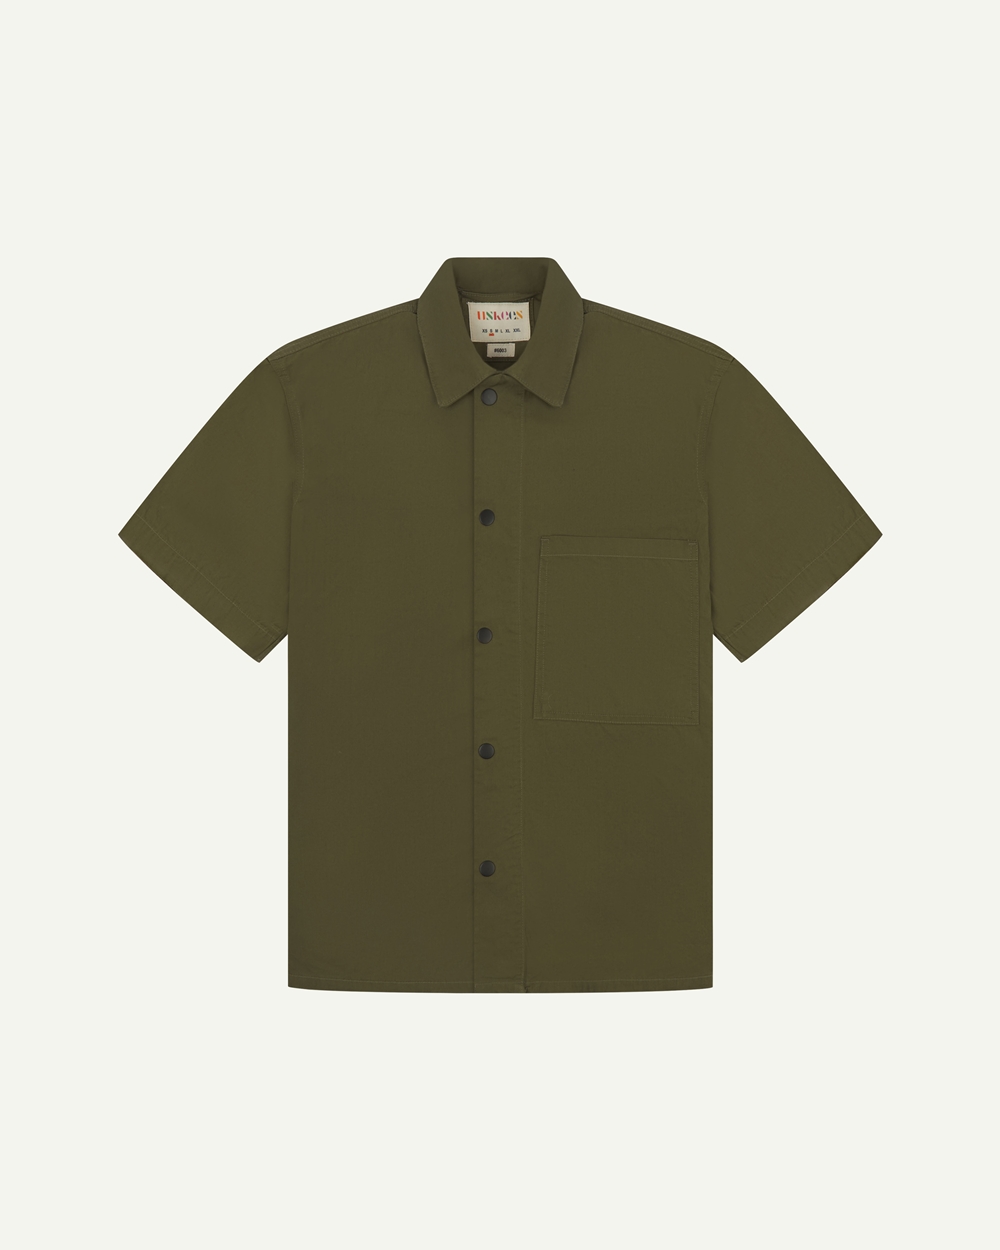 #6003 lightweight short sleeve shirt (olive)USKEES(어스키스)